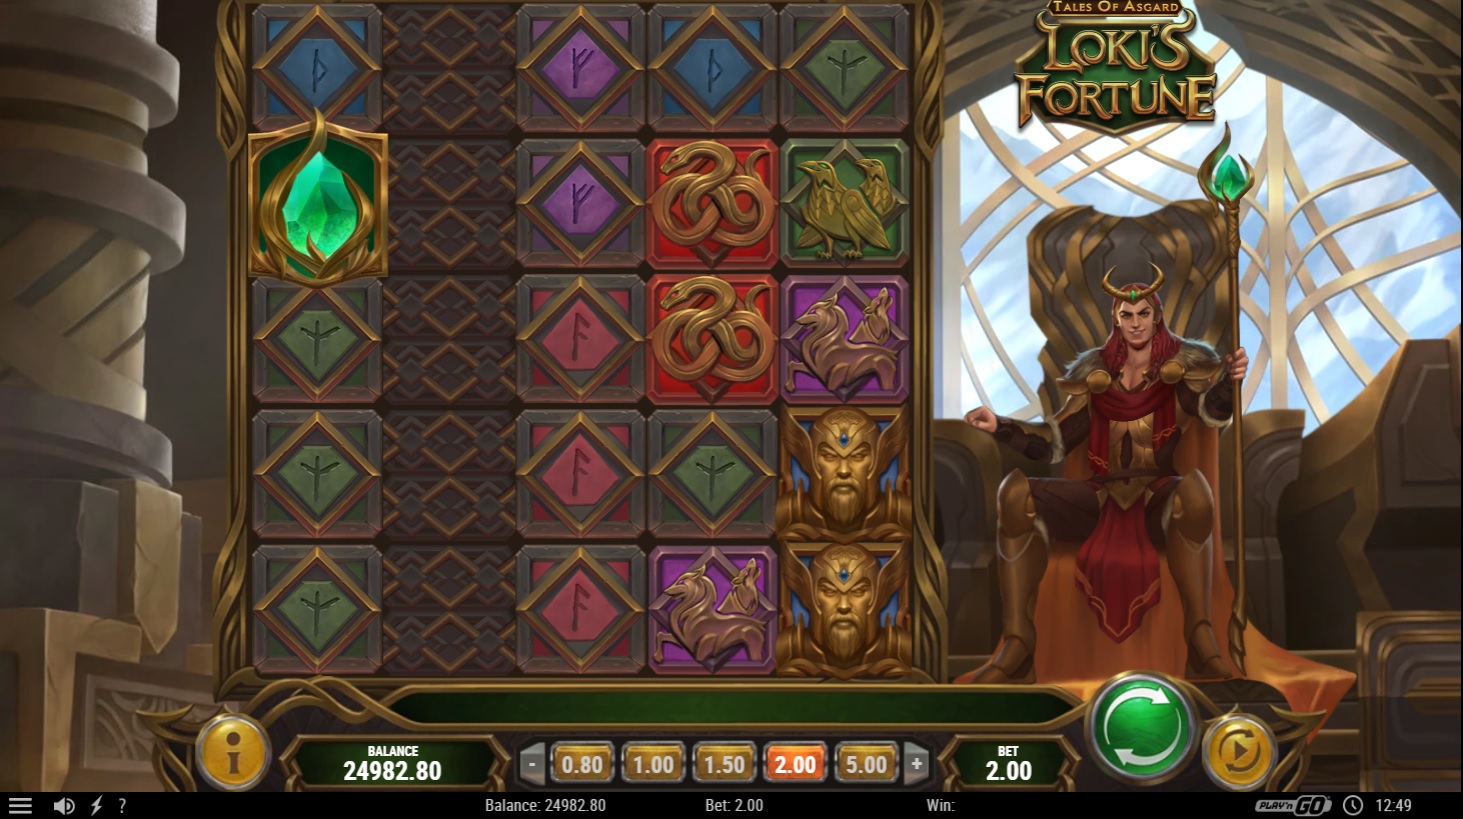 Tales of Asgard - Loki's Fortune, base slot